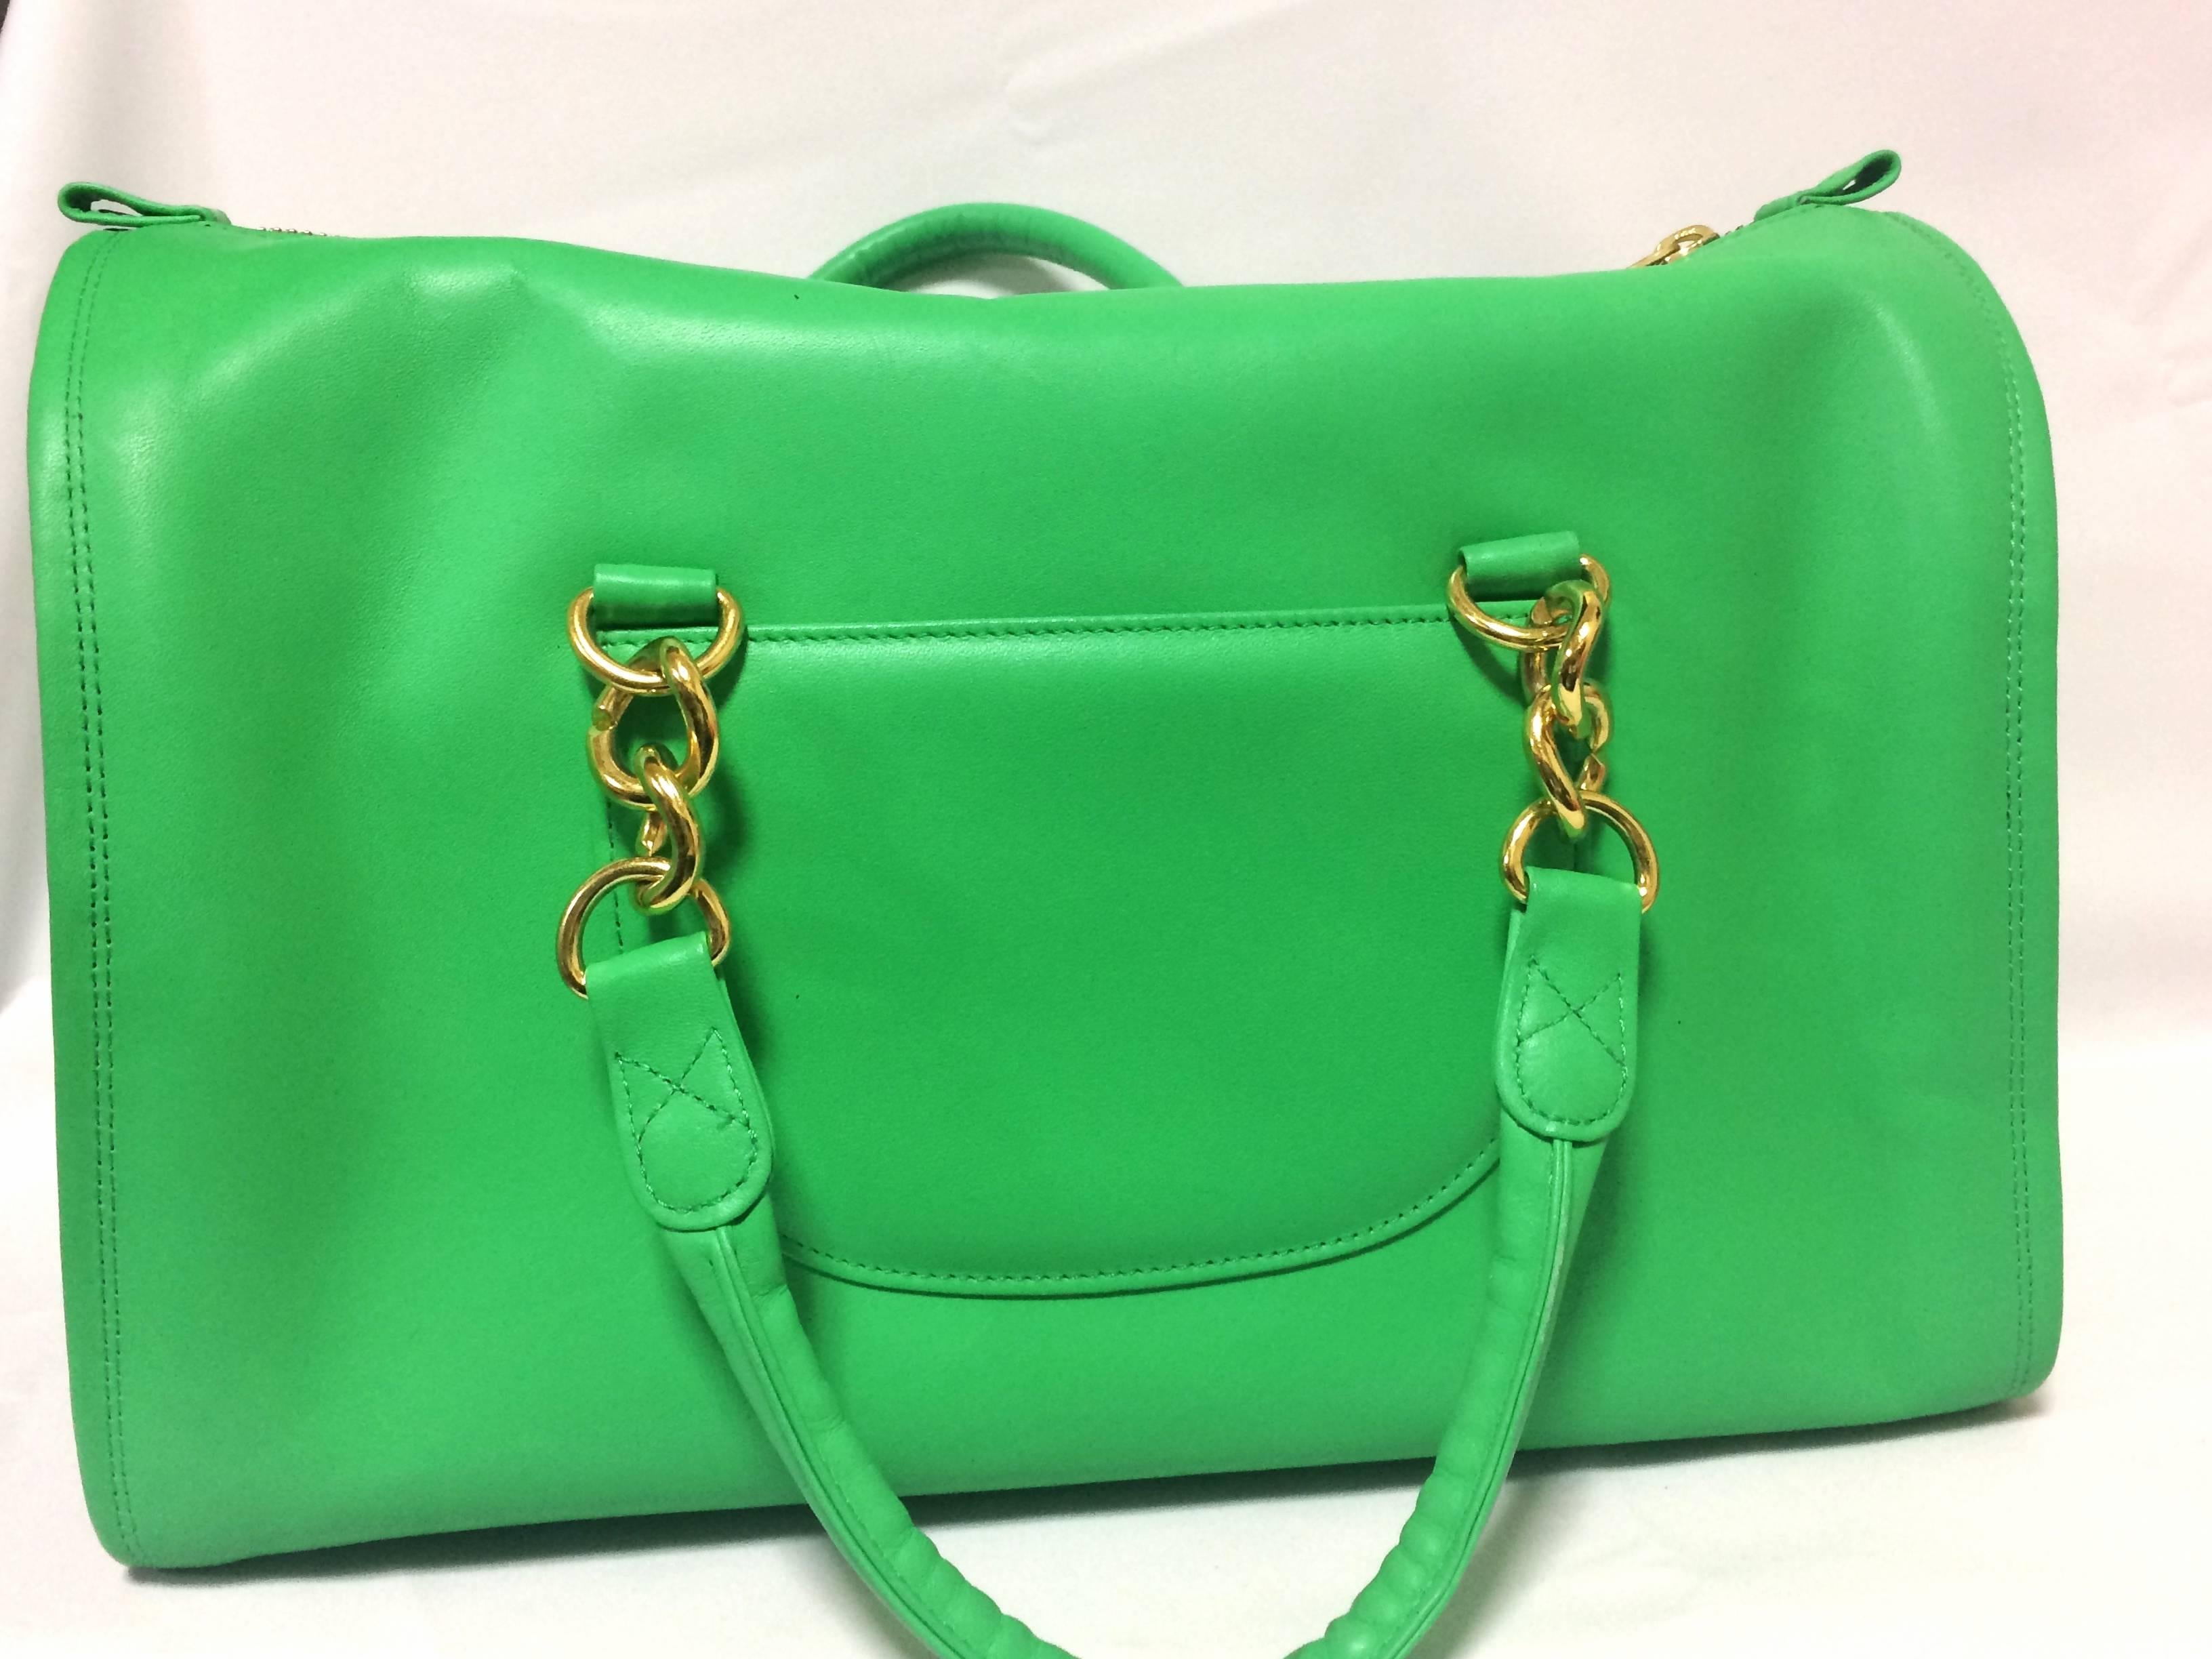 Green Vintage SONIA RYKIEL green leather handbag purse in speedy bag style with chains